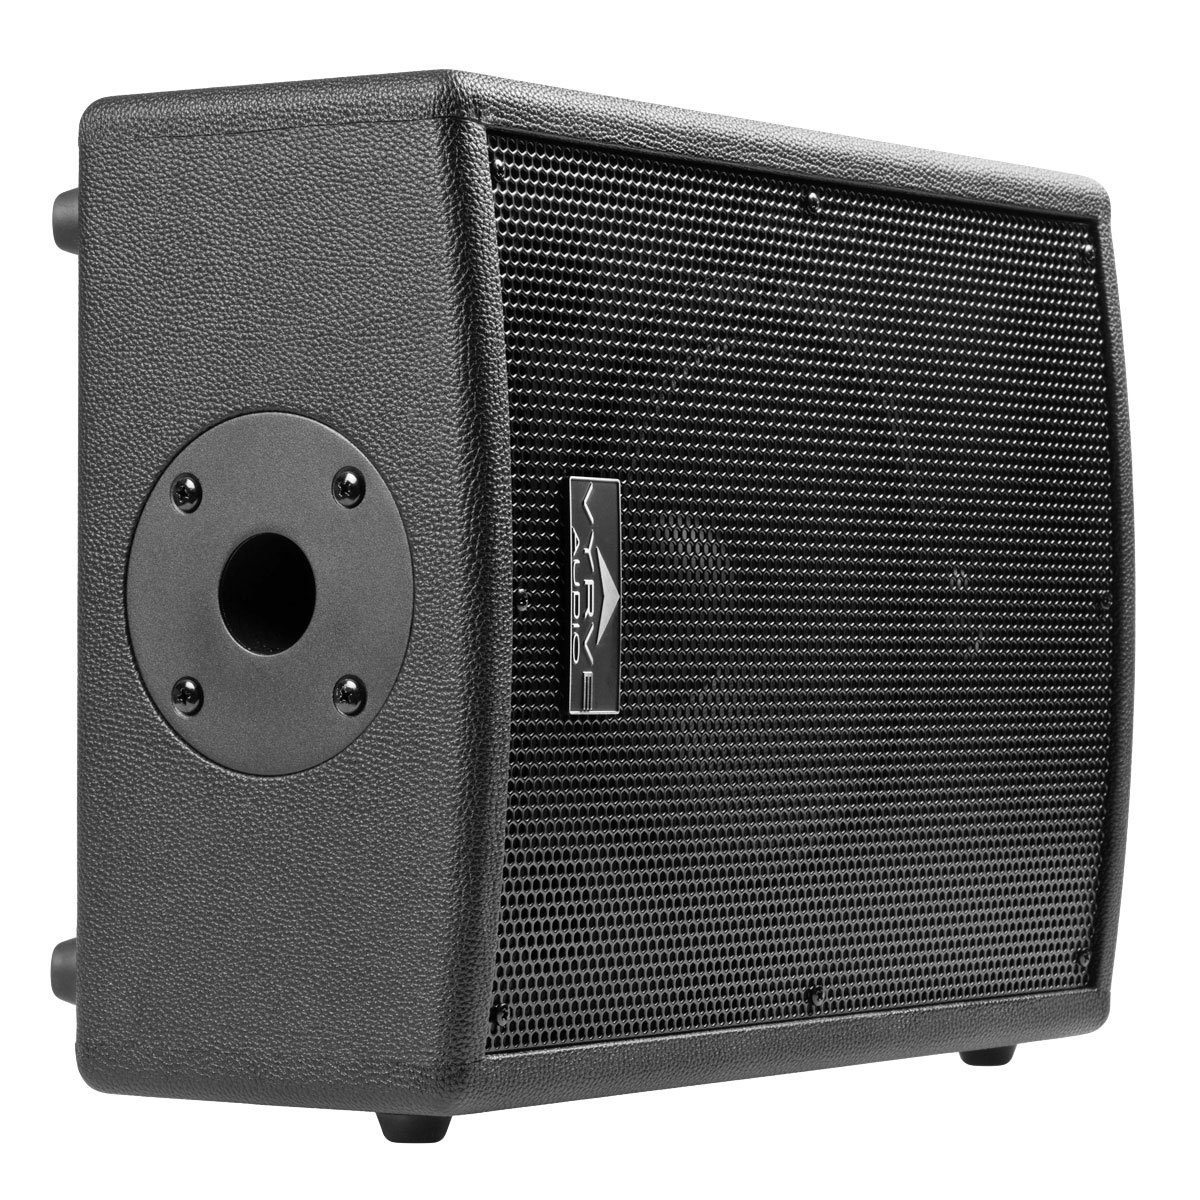 Vyrve Audio Speaker Vyrve ATRIA Audio + Klinkenkabel Home Aktivmonitor